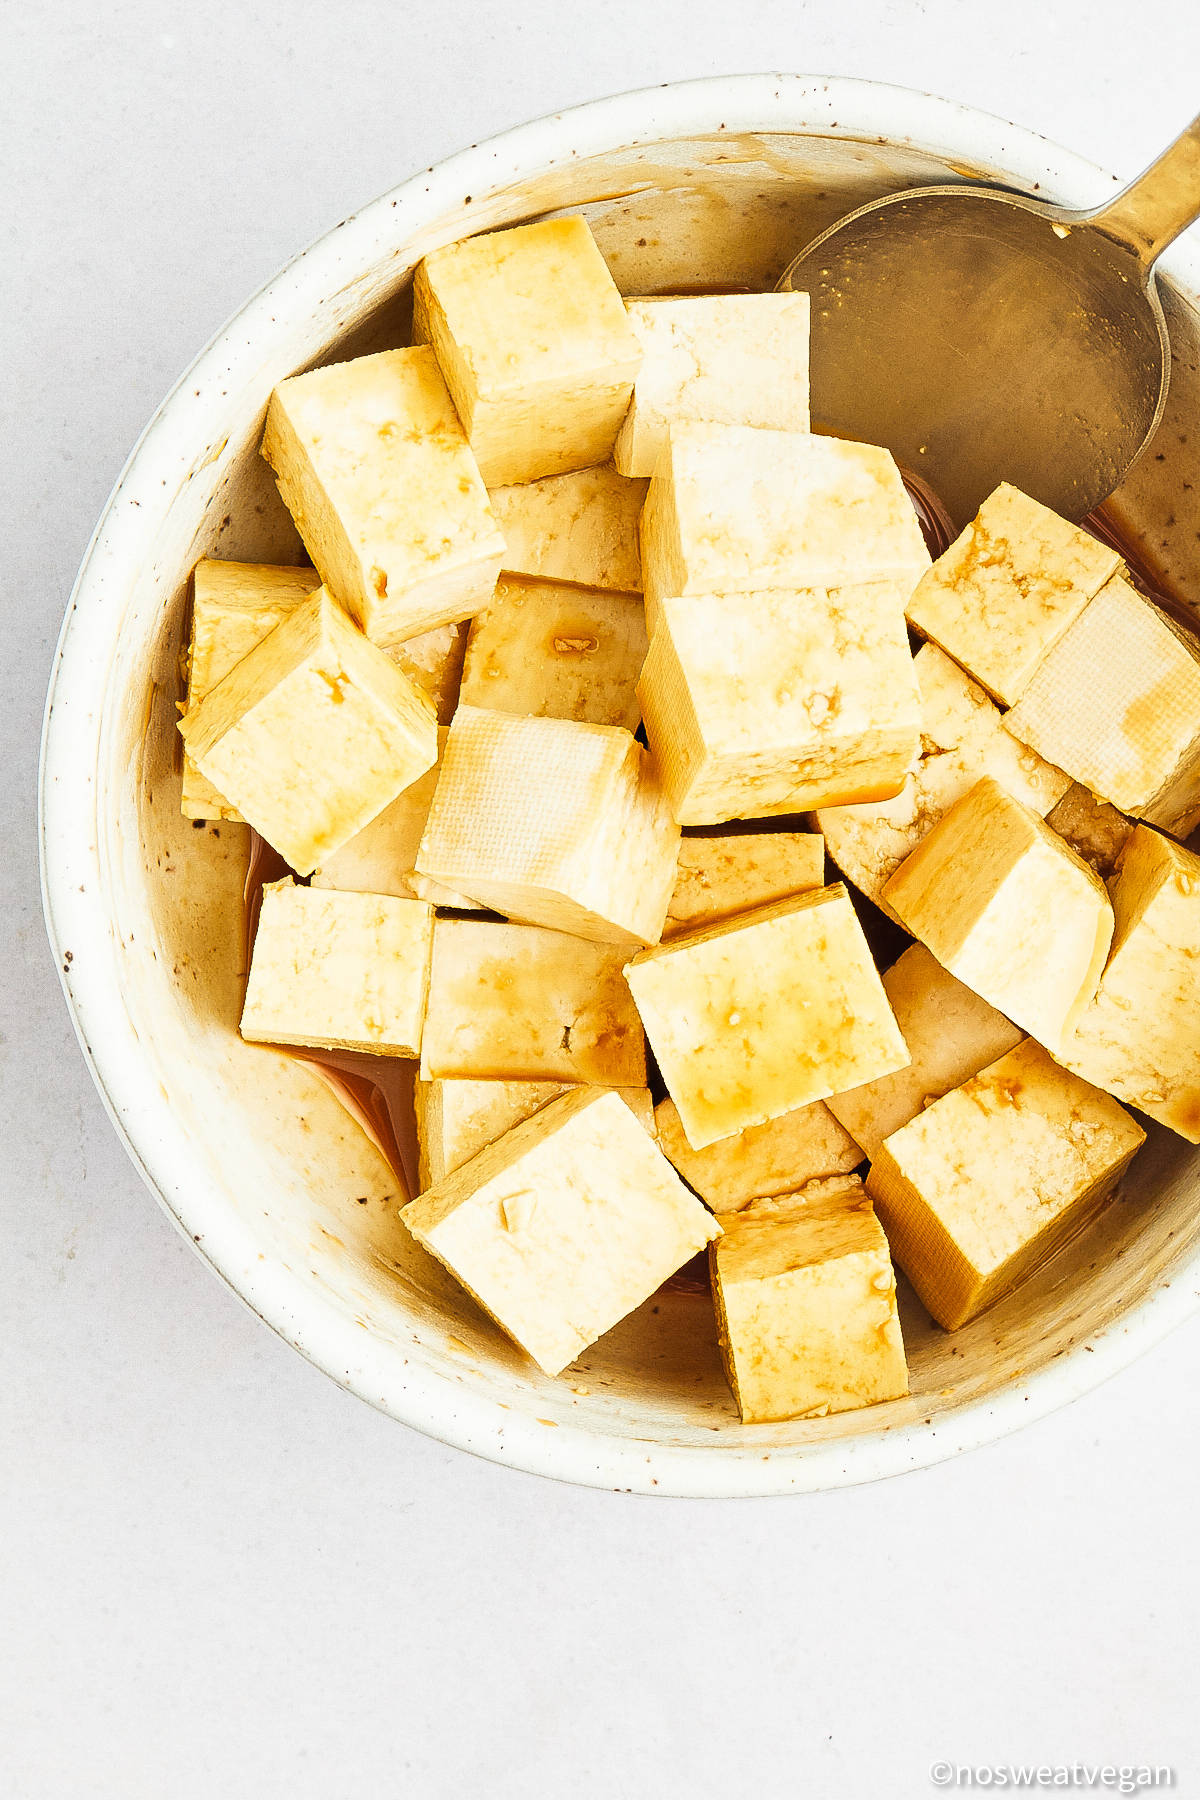 Marinated tofu in a bowl.